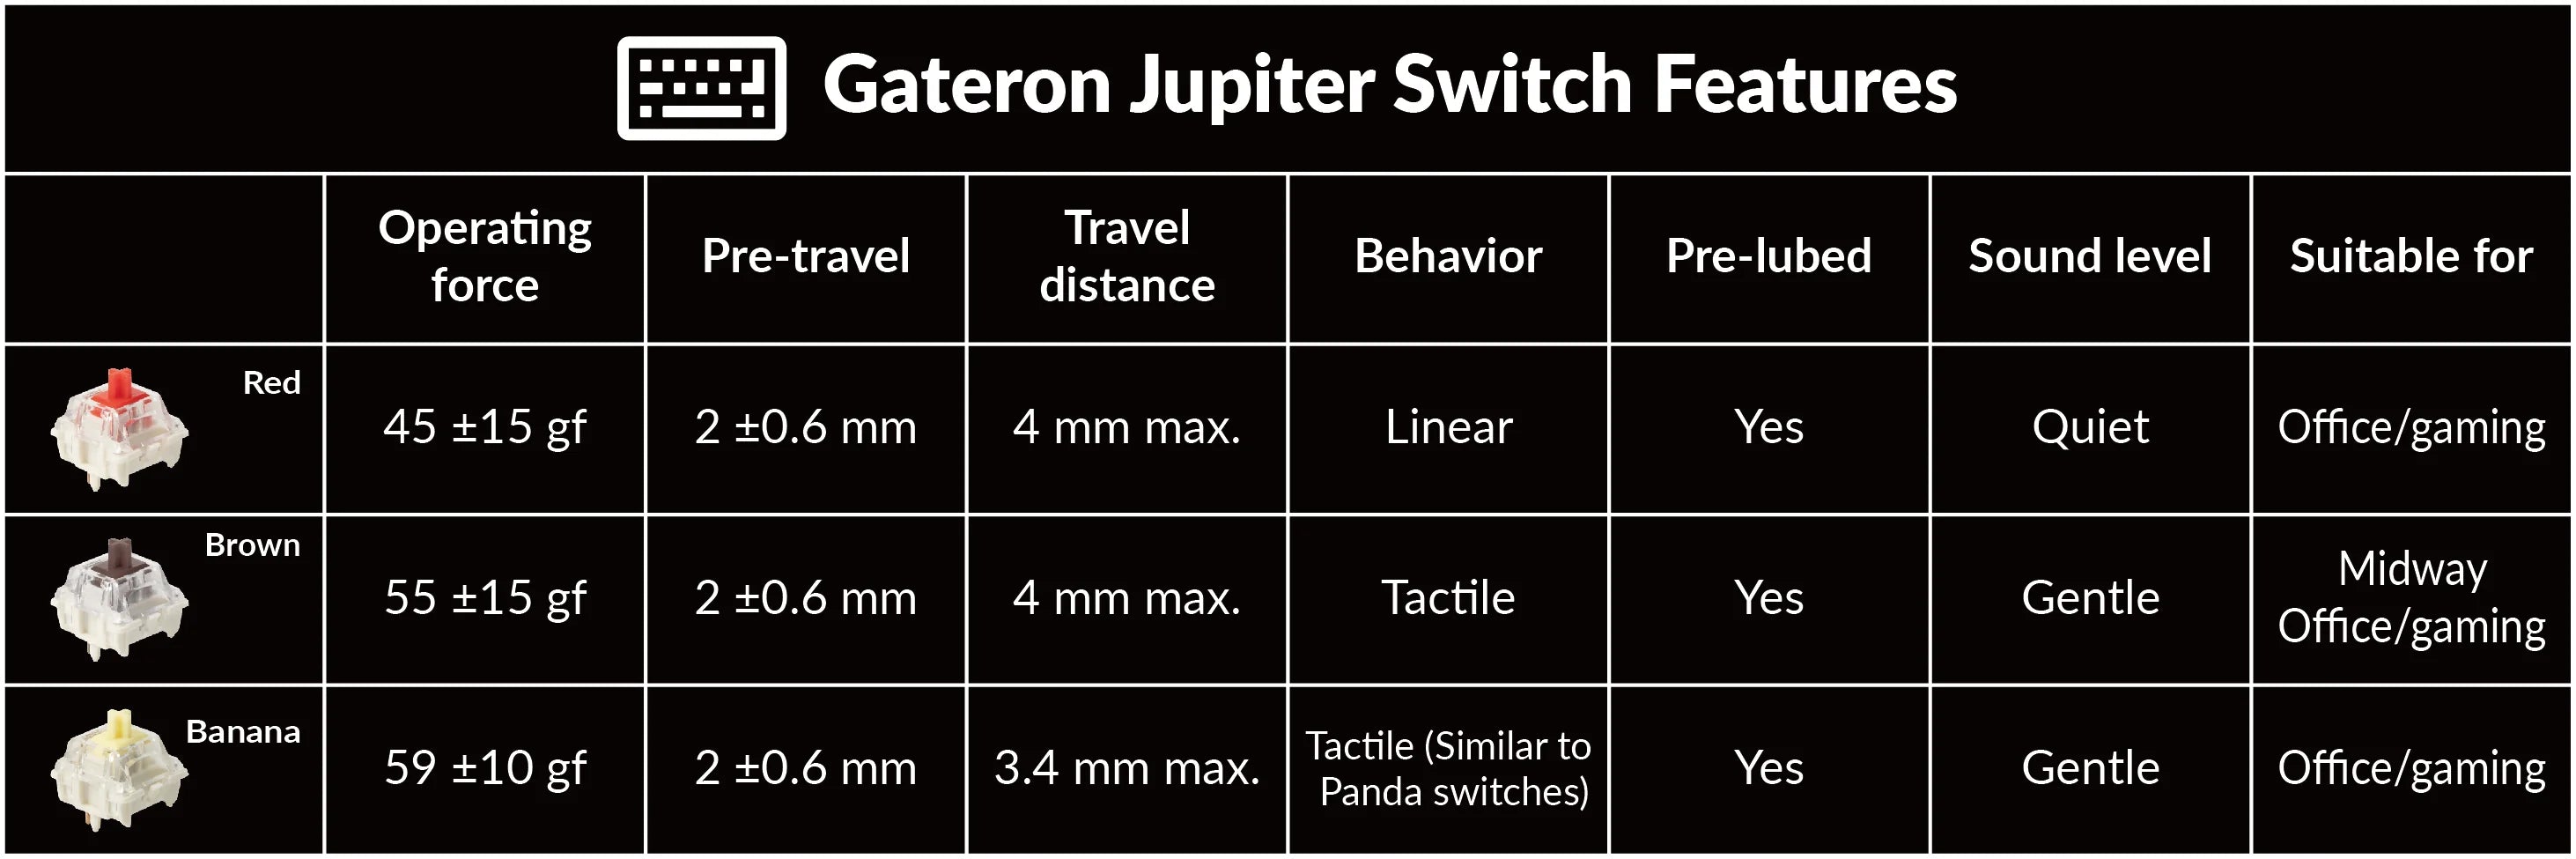 Gateron Jupiter Switch Features of Keychron V1 Max QMK/VIA Wireless Custom Mechanical Keyboard